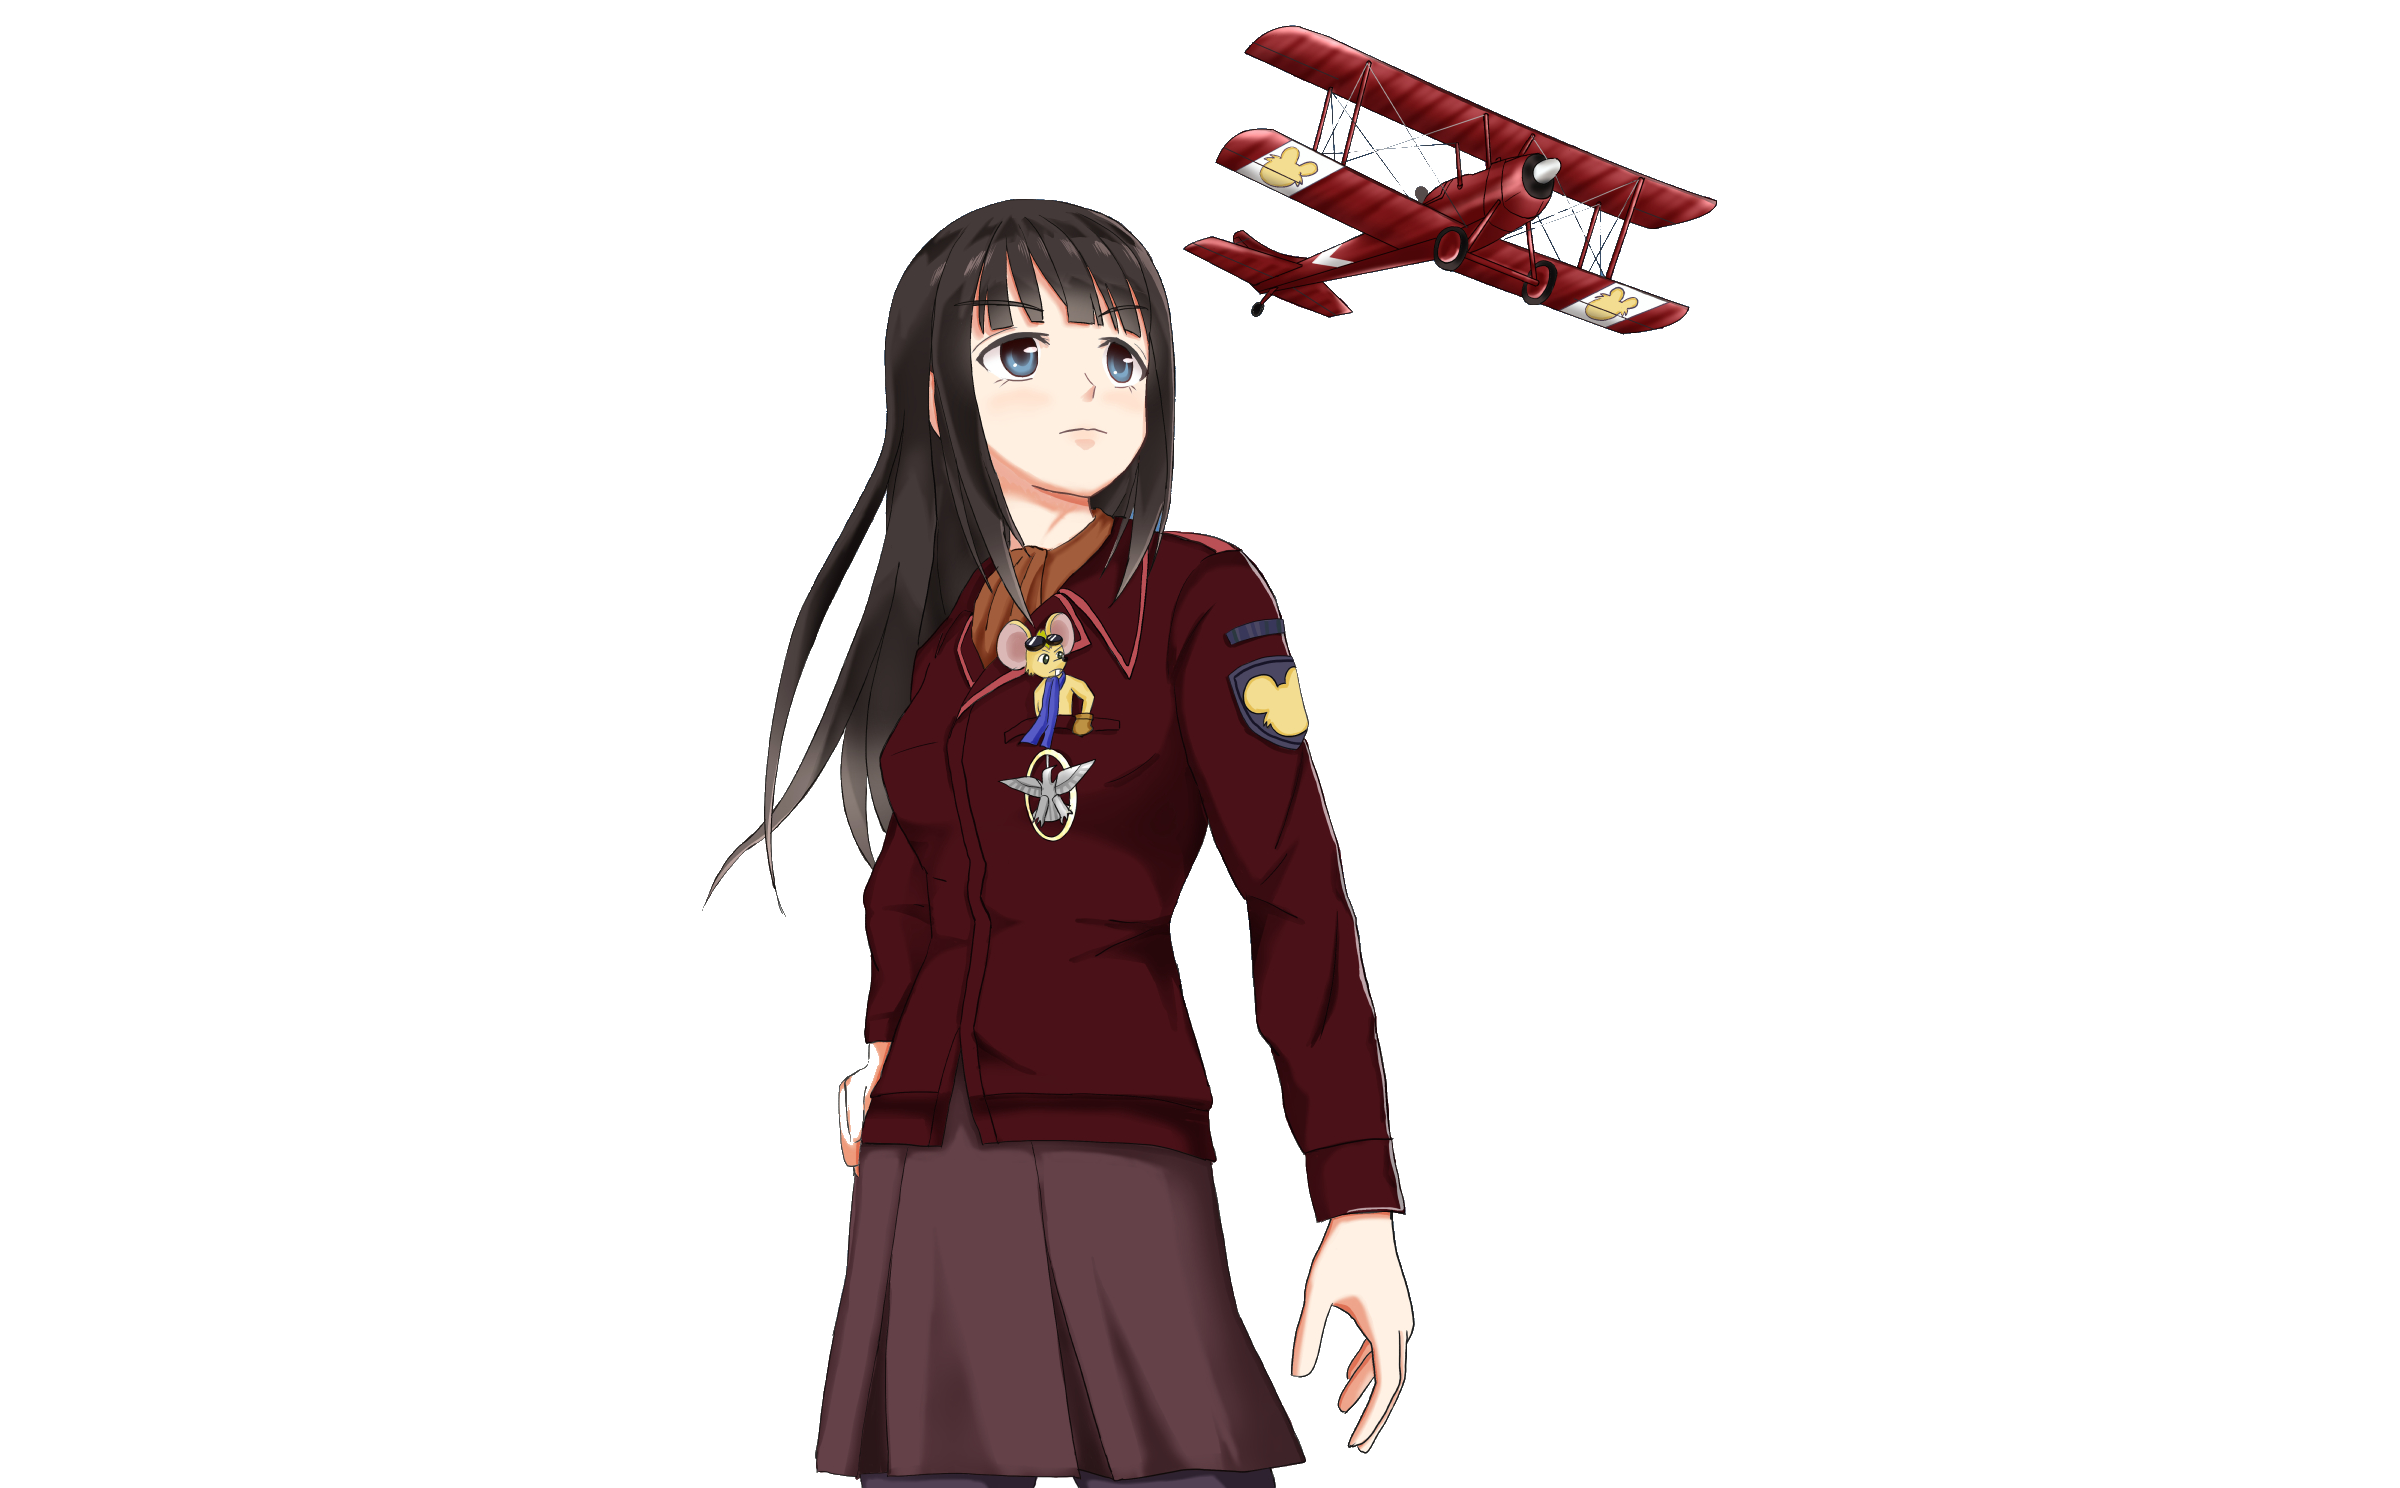 Black Hair, Long Hair, Anime, Military Uniform, Airplane